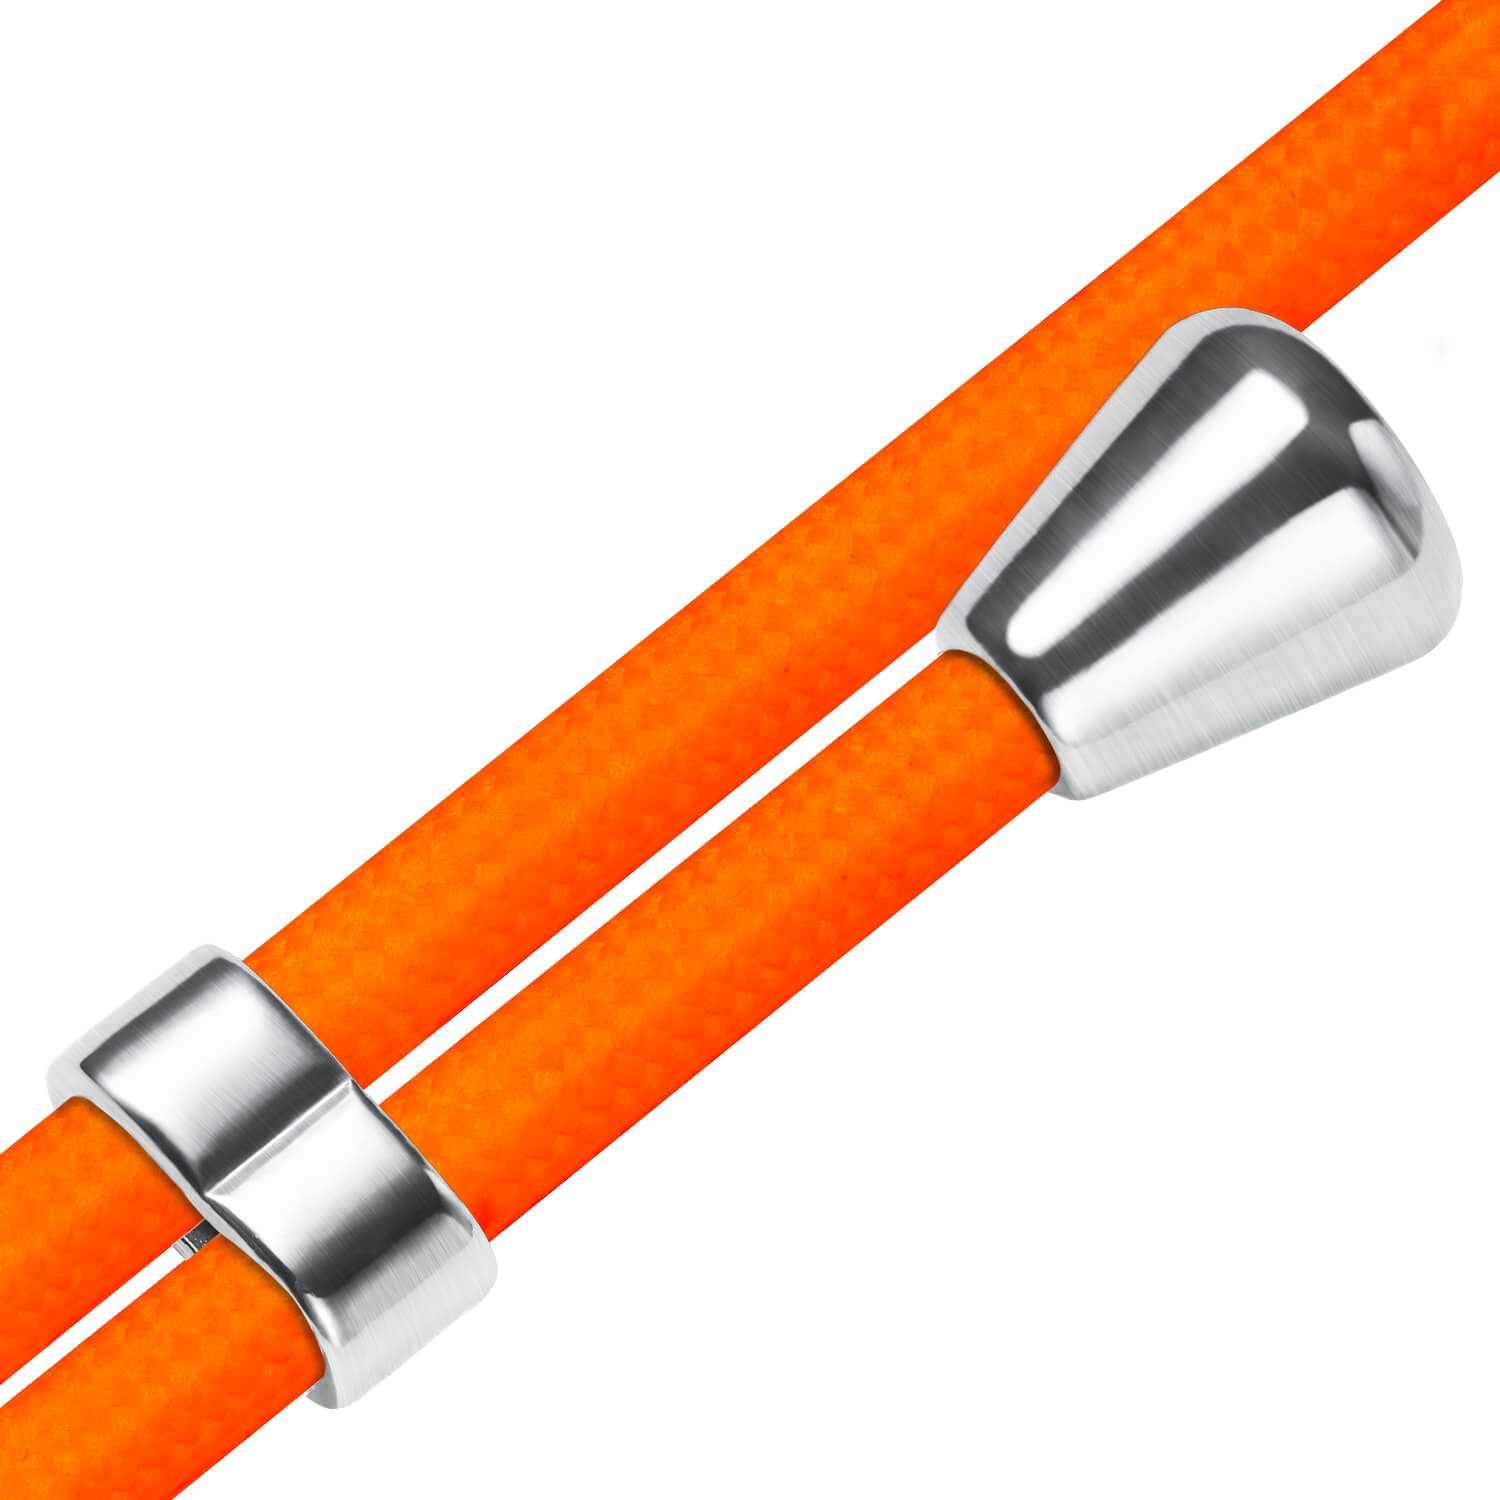 Max, ENERGY MTB Umhänge-Hülle / 14 MORE Pro silber Neon mit Backcover, Orange Kordel, Apple, iPhone